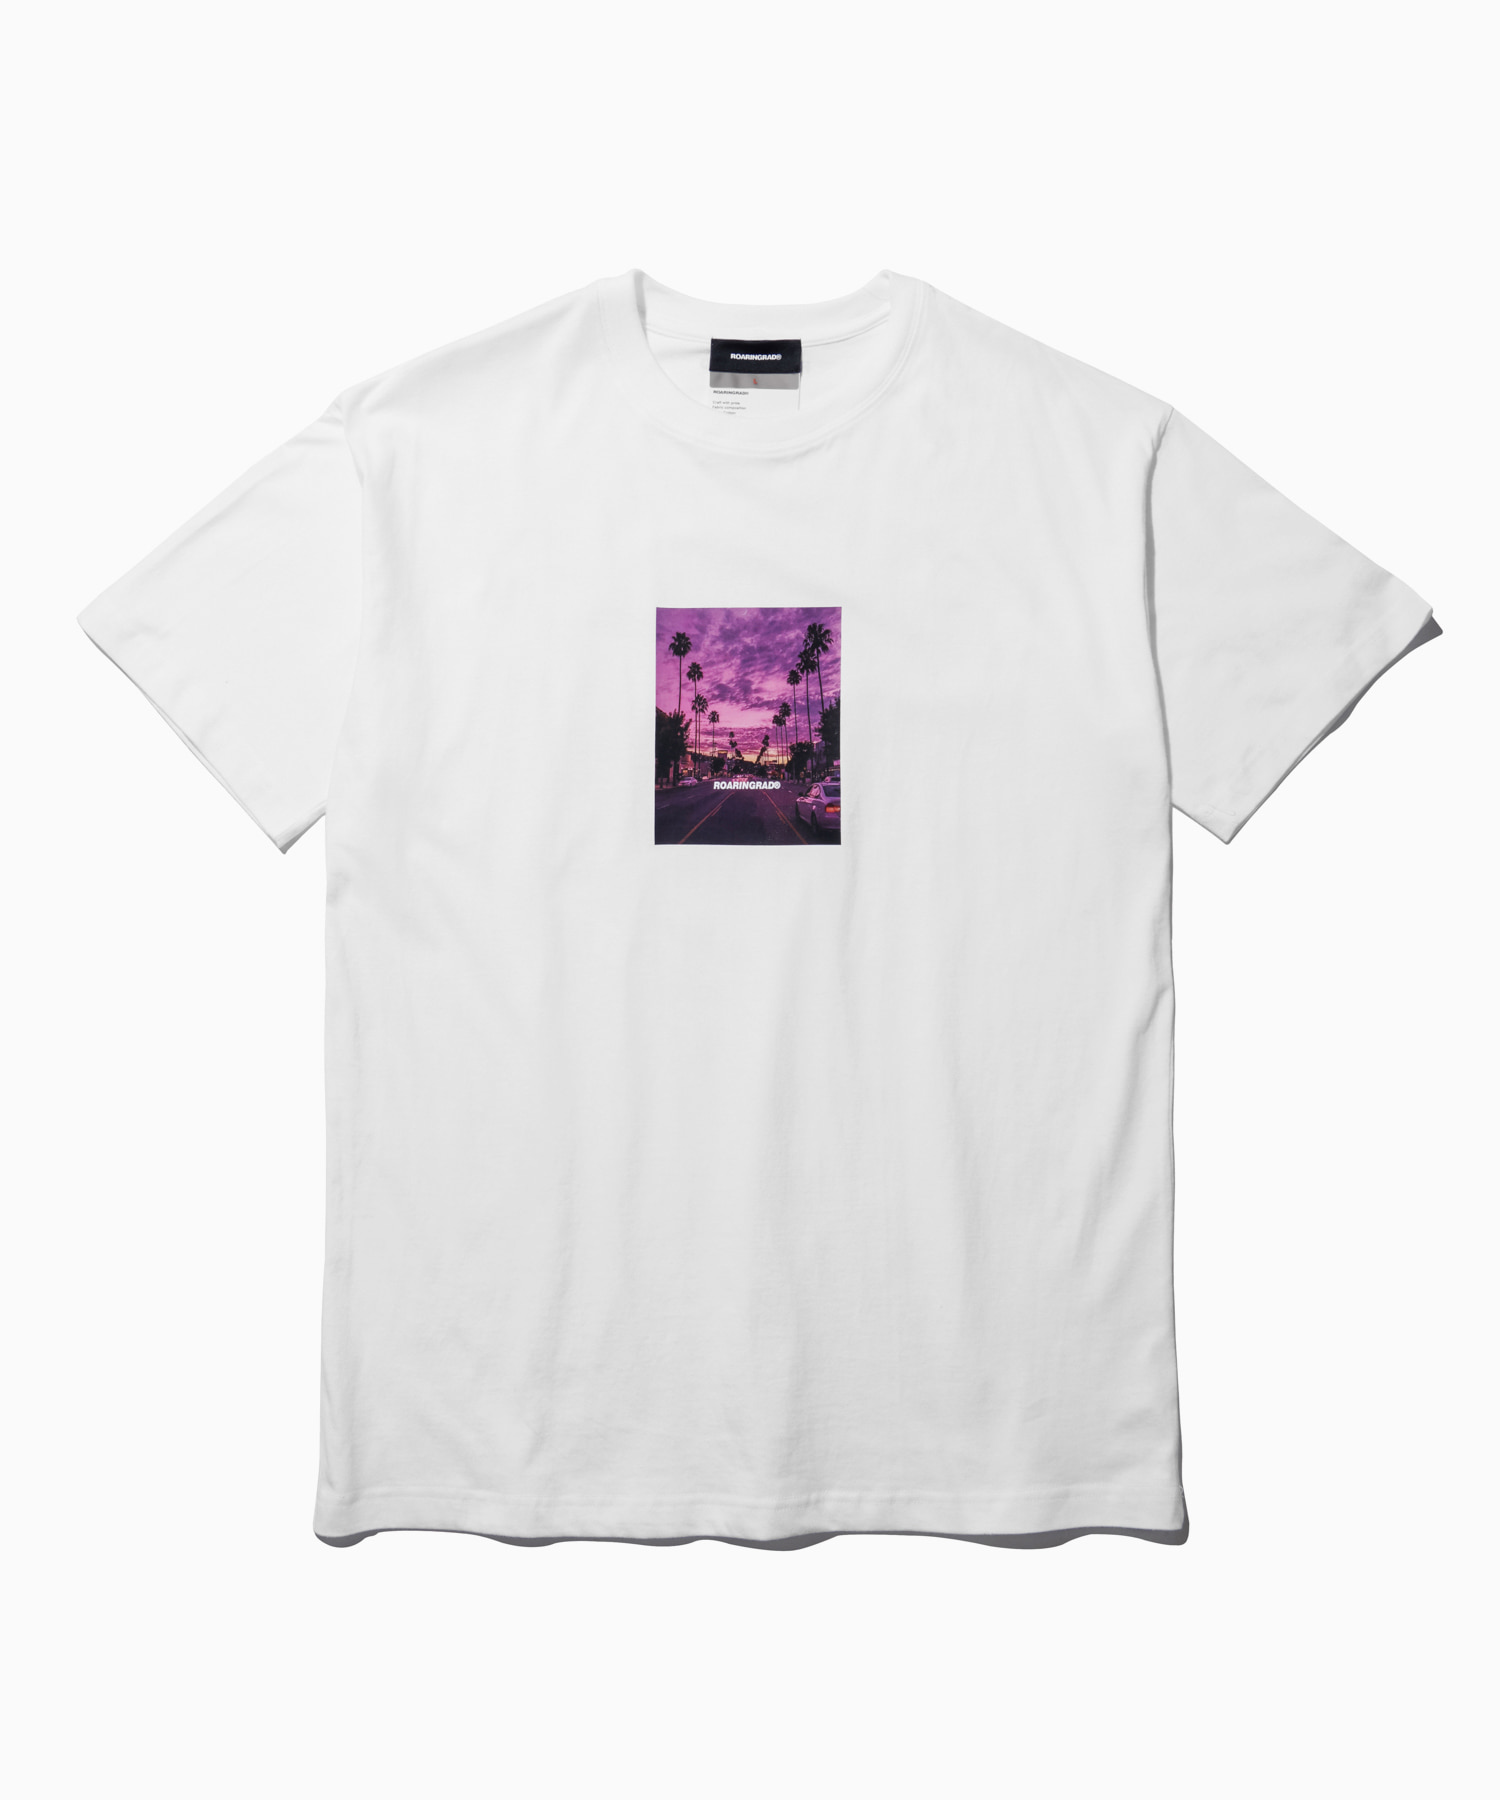 purple sunset t-shirt white - 로어링라드(ROARINGRAD)